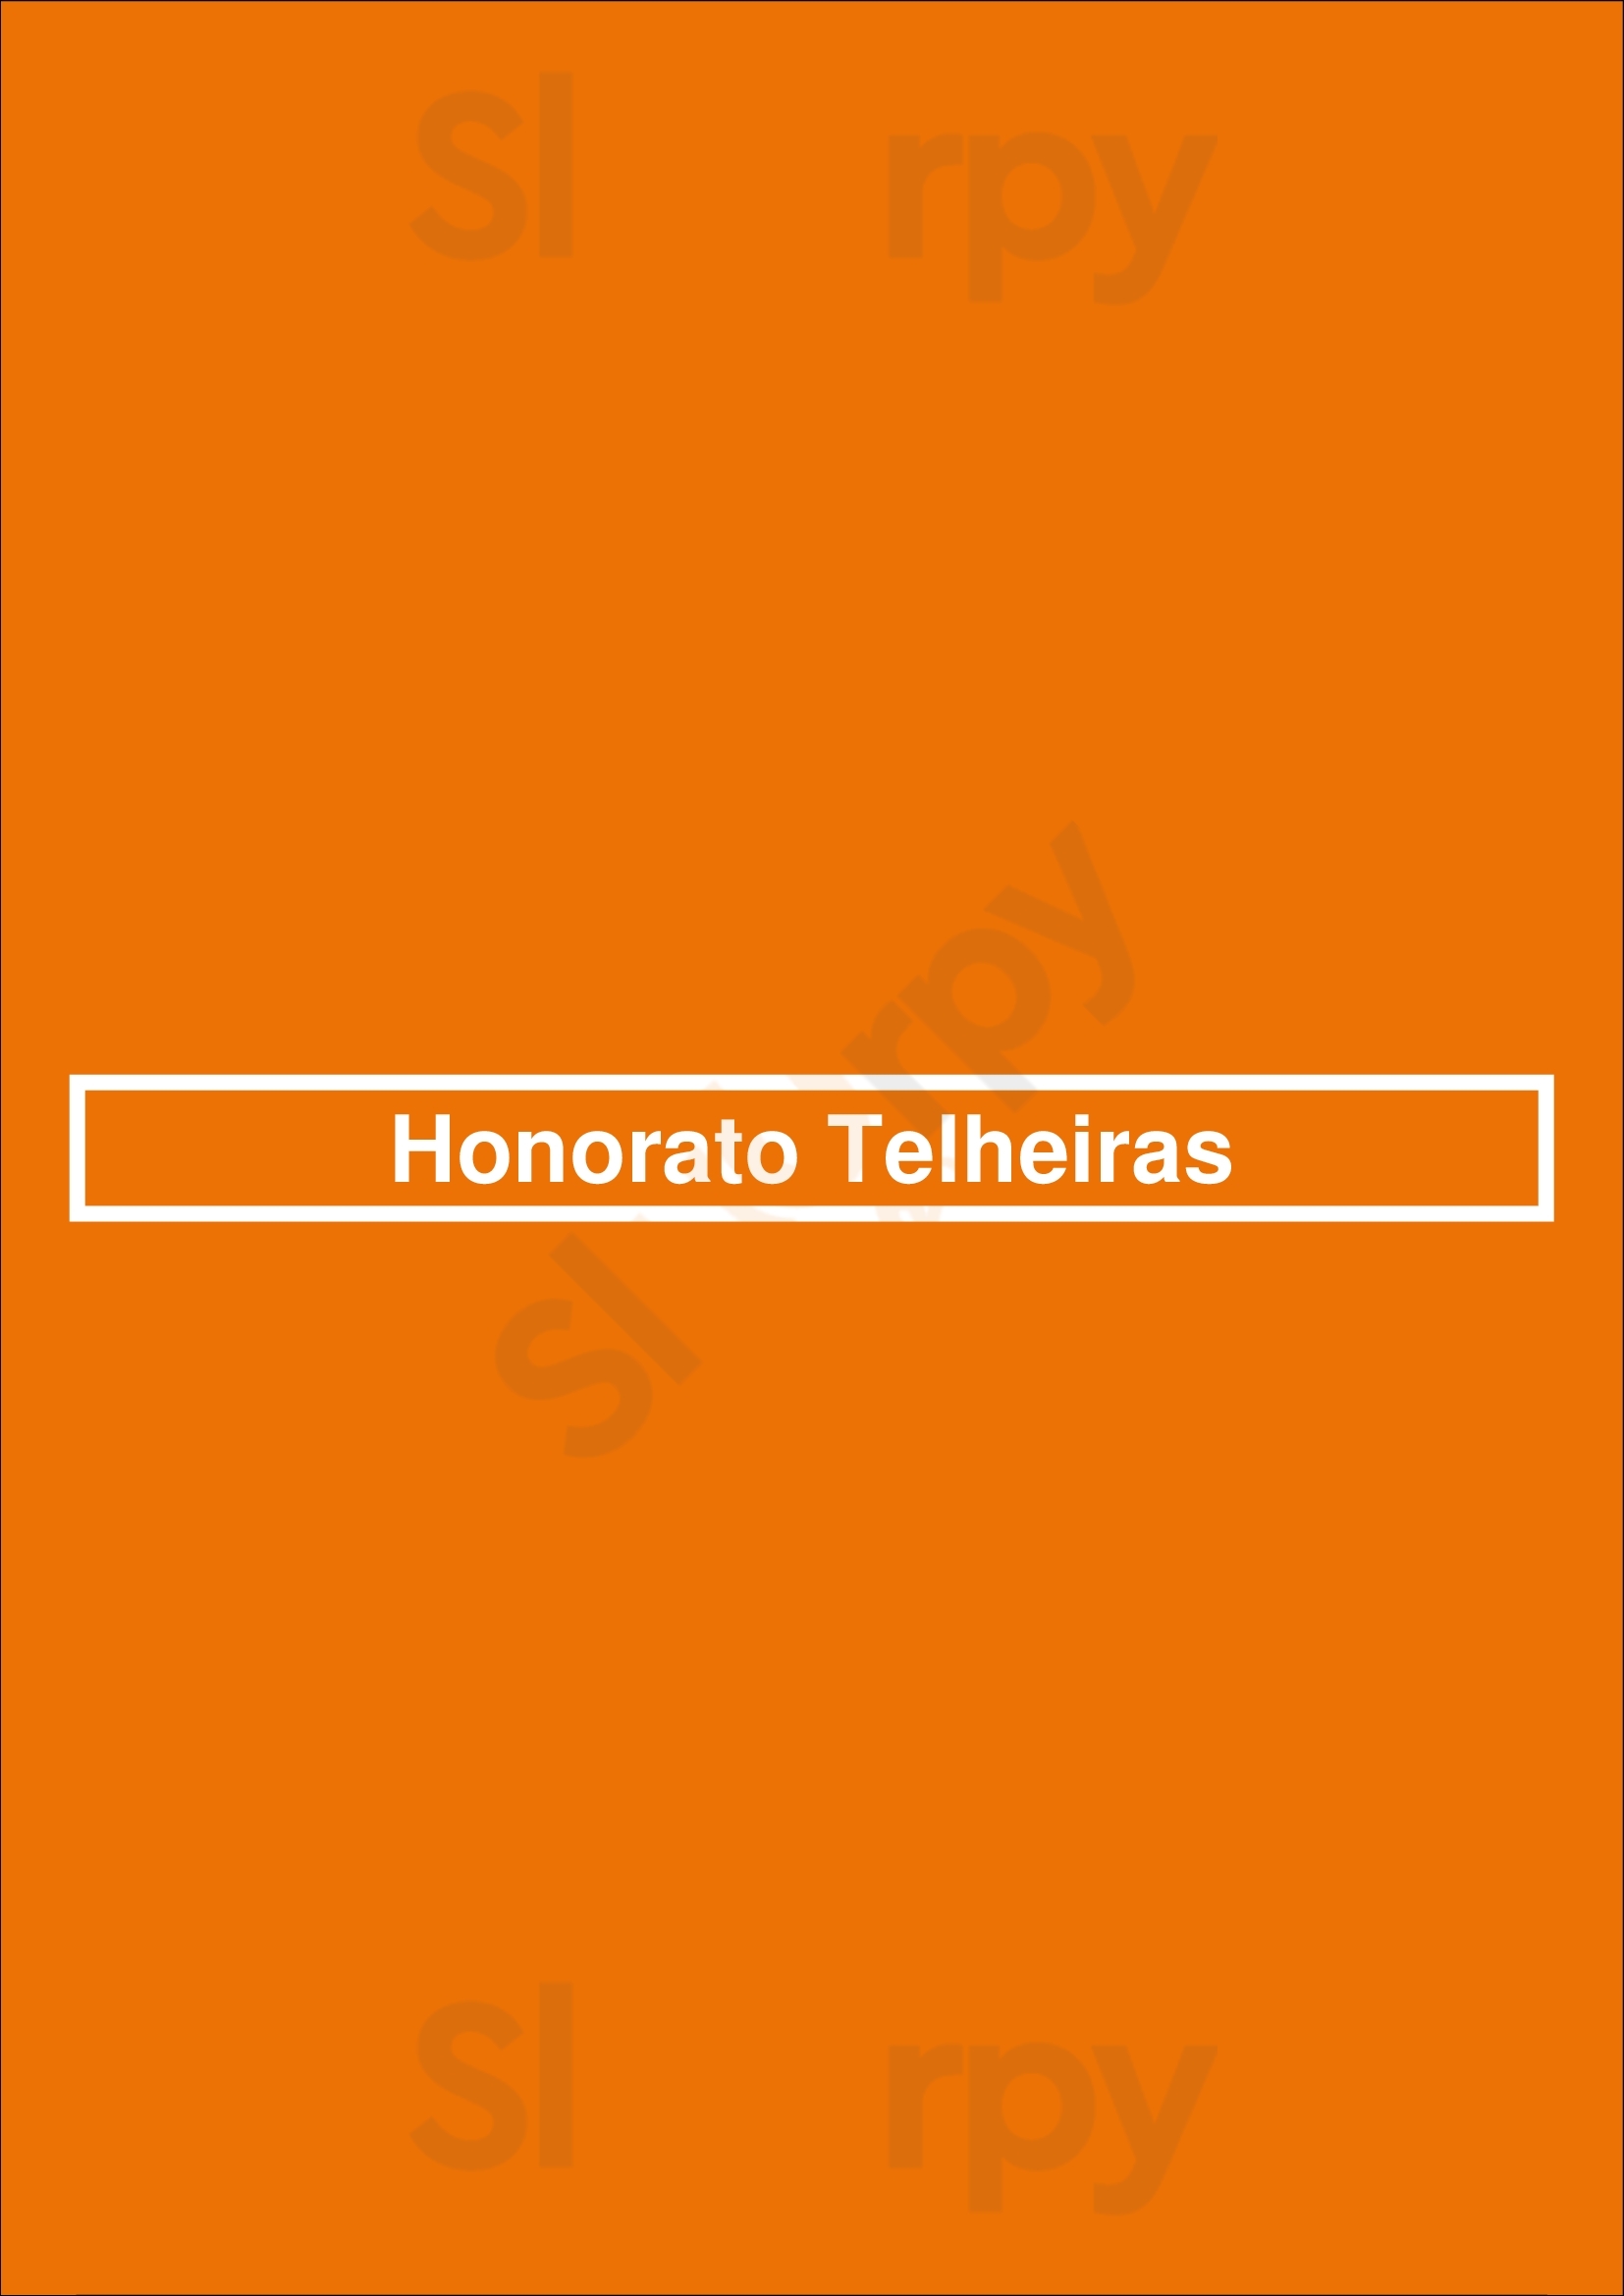 Honorato Telheiras Lisboa Menu - 1